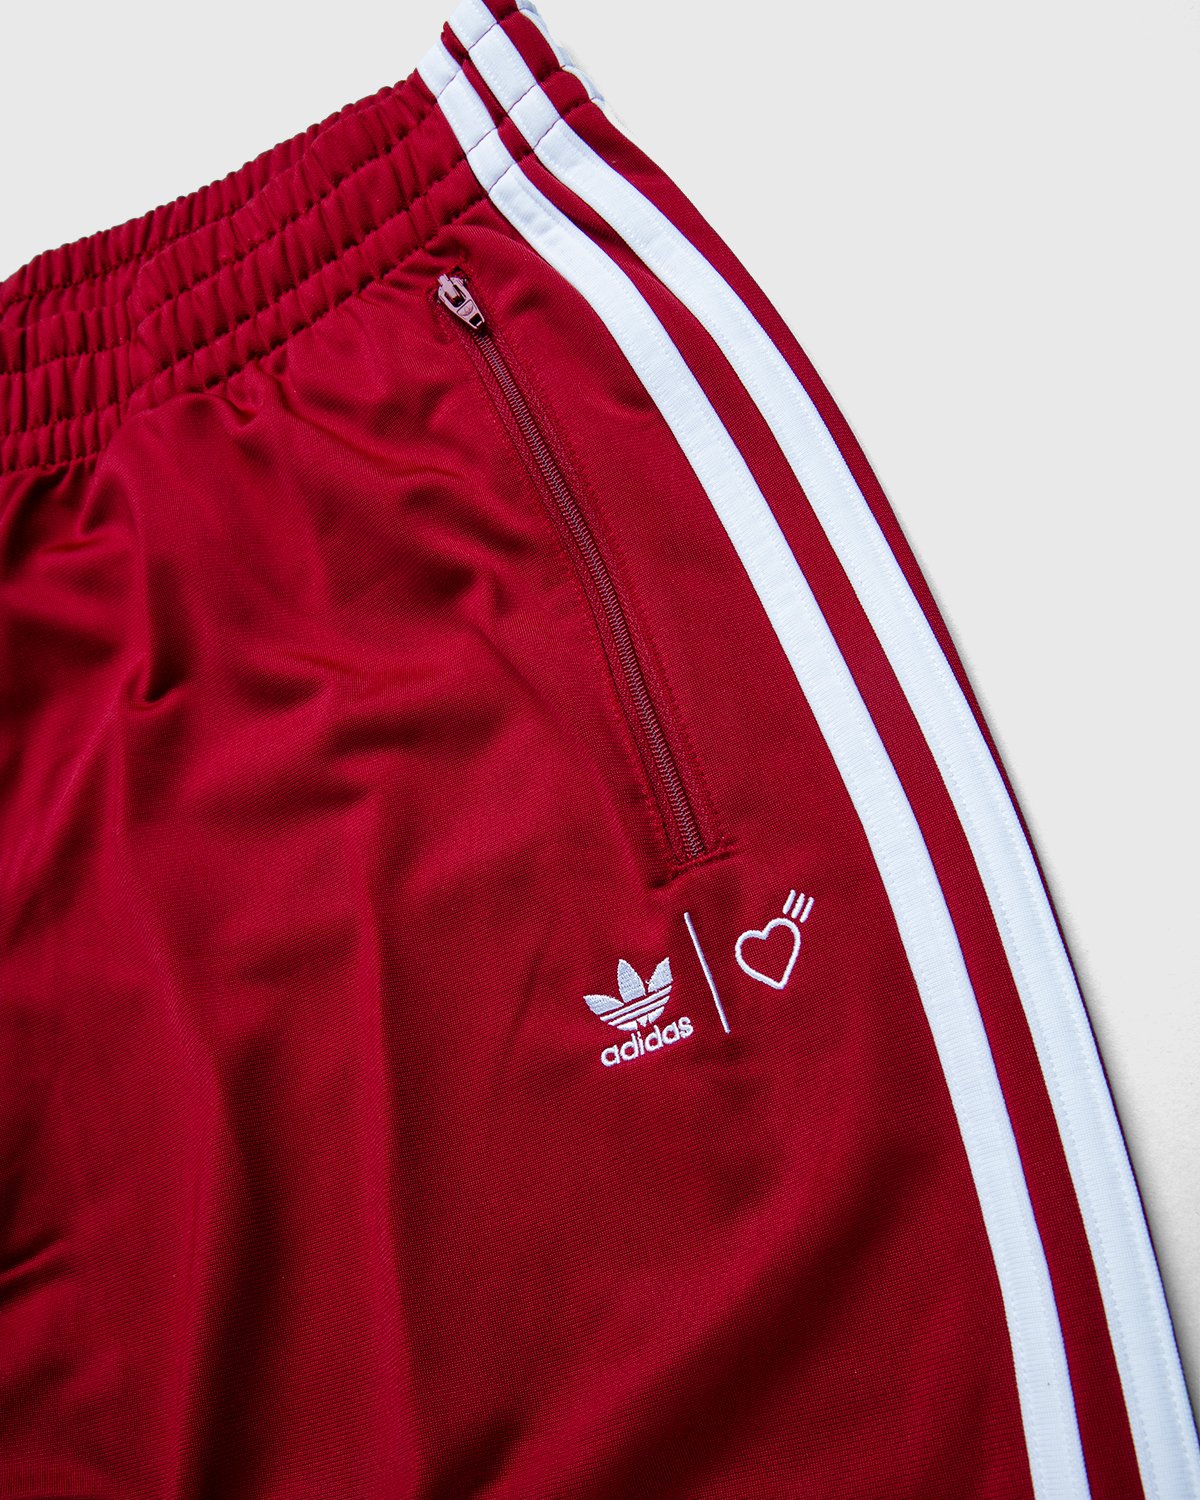 adidas Originals x Human Made - Firebird Track Pants Burgundy - Clothing - Red - Image 3